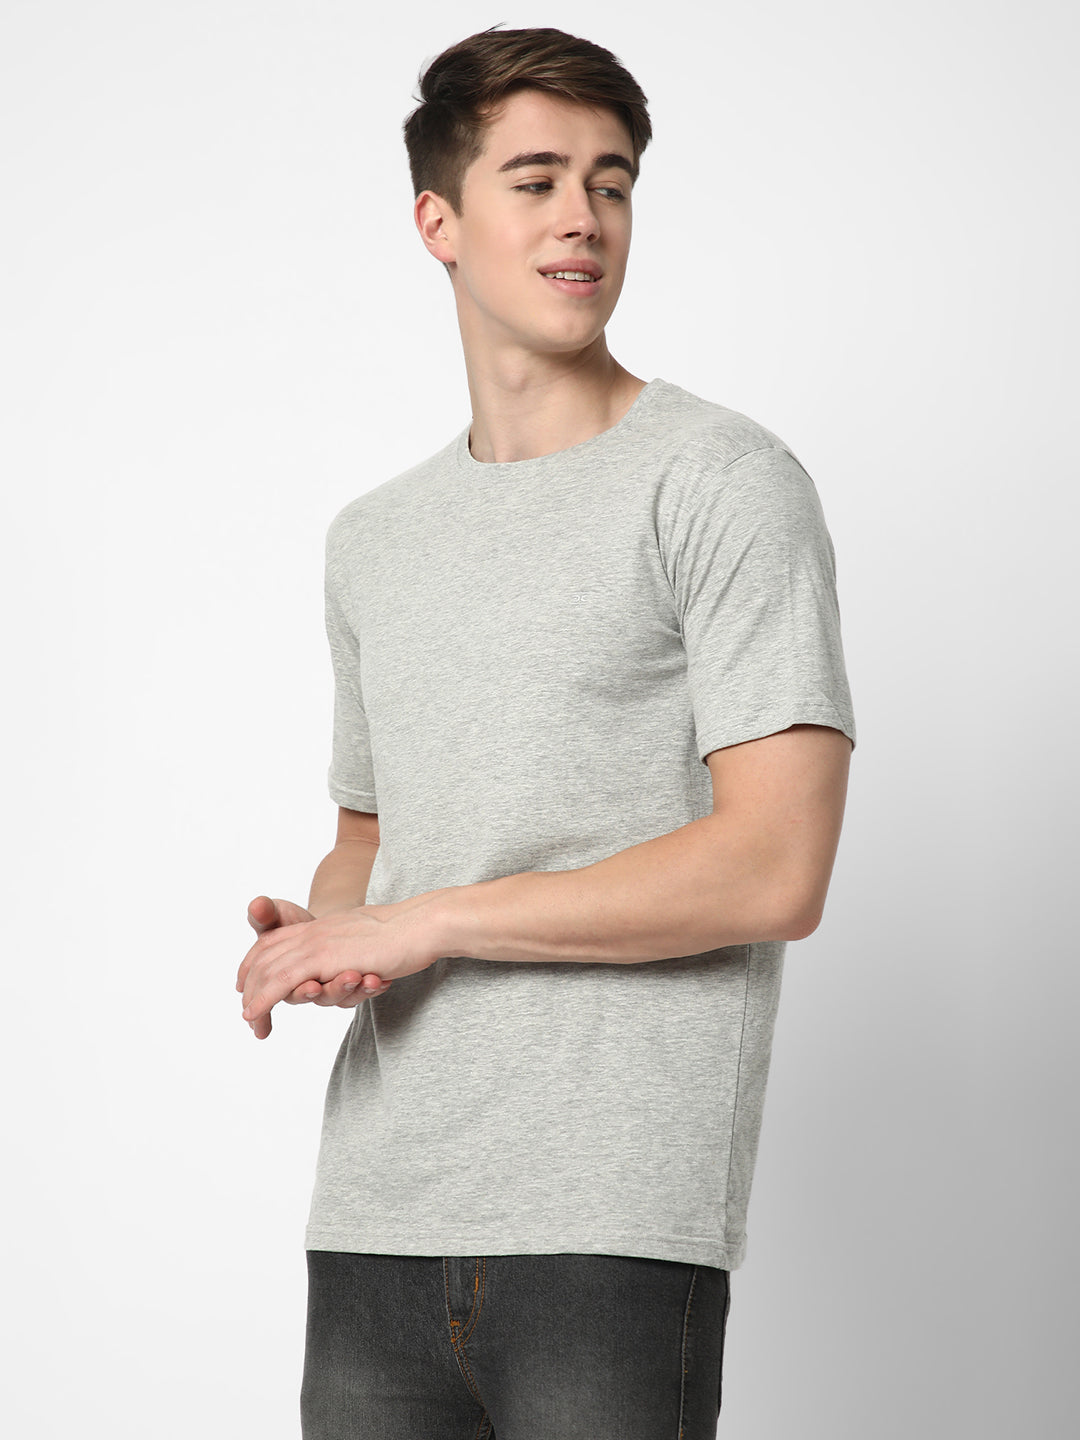 Cotstyle Cotton Fabrics Round Neck Short Length Plain Half Sleeve Casual & Daily Wear Men's T-Shirts -  Pack of 1 - Lt.Grey Melange